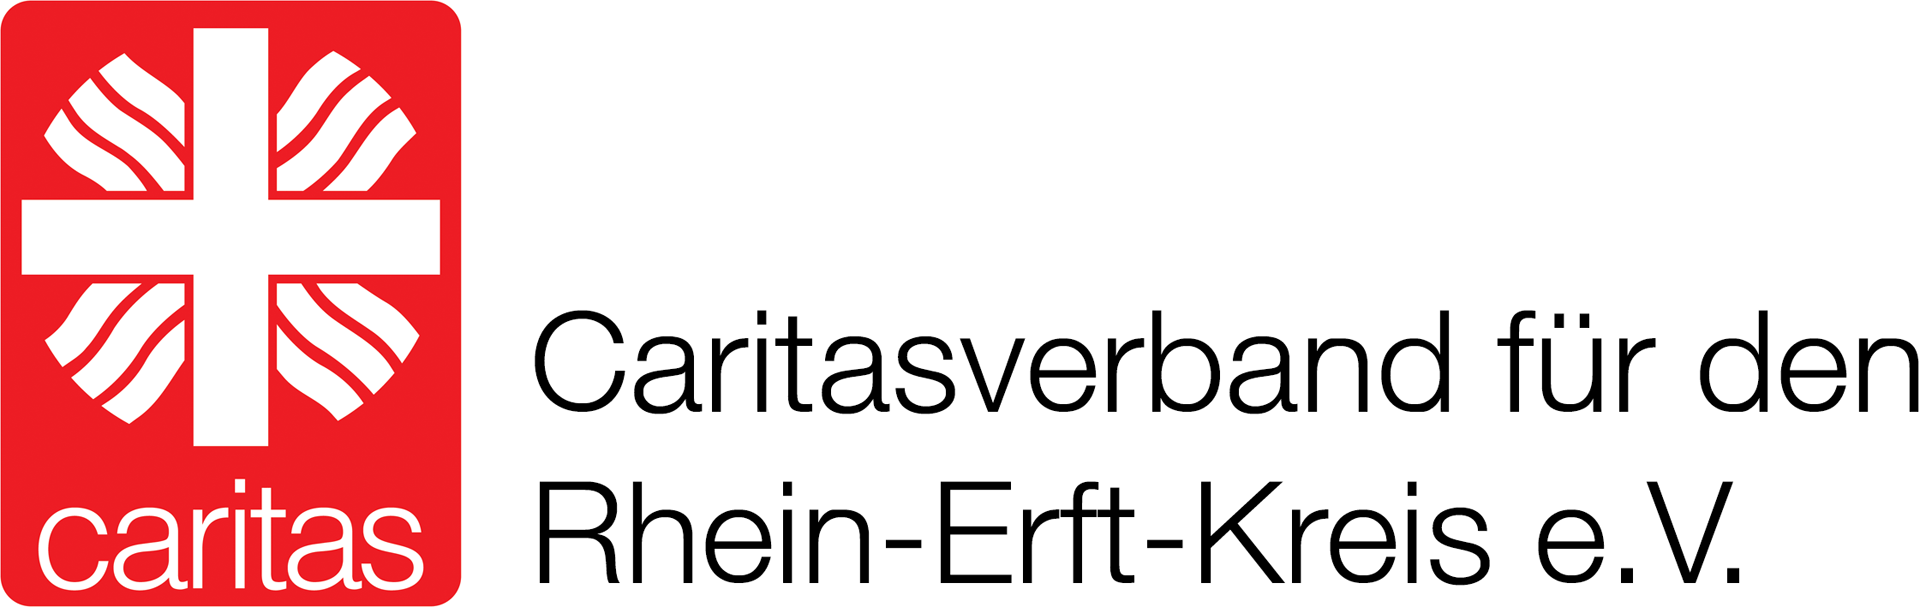 200429_Caritas_Logo_Rhein-Erft_kl2